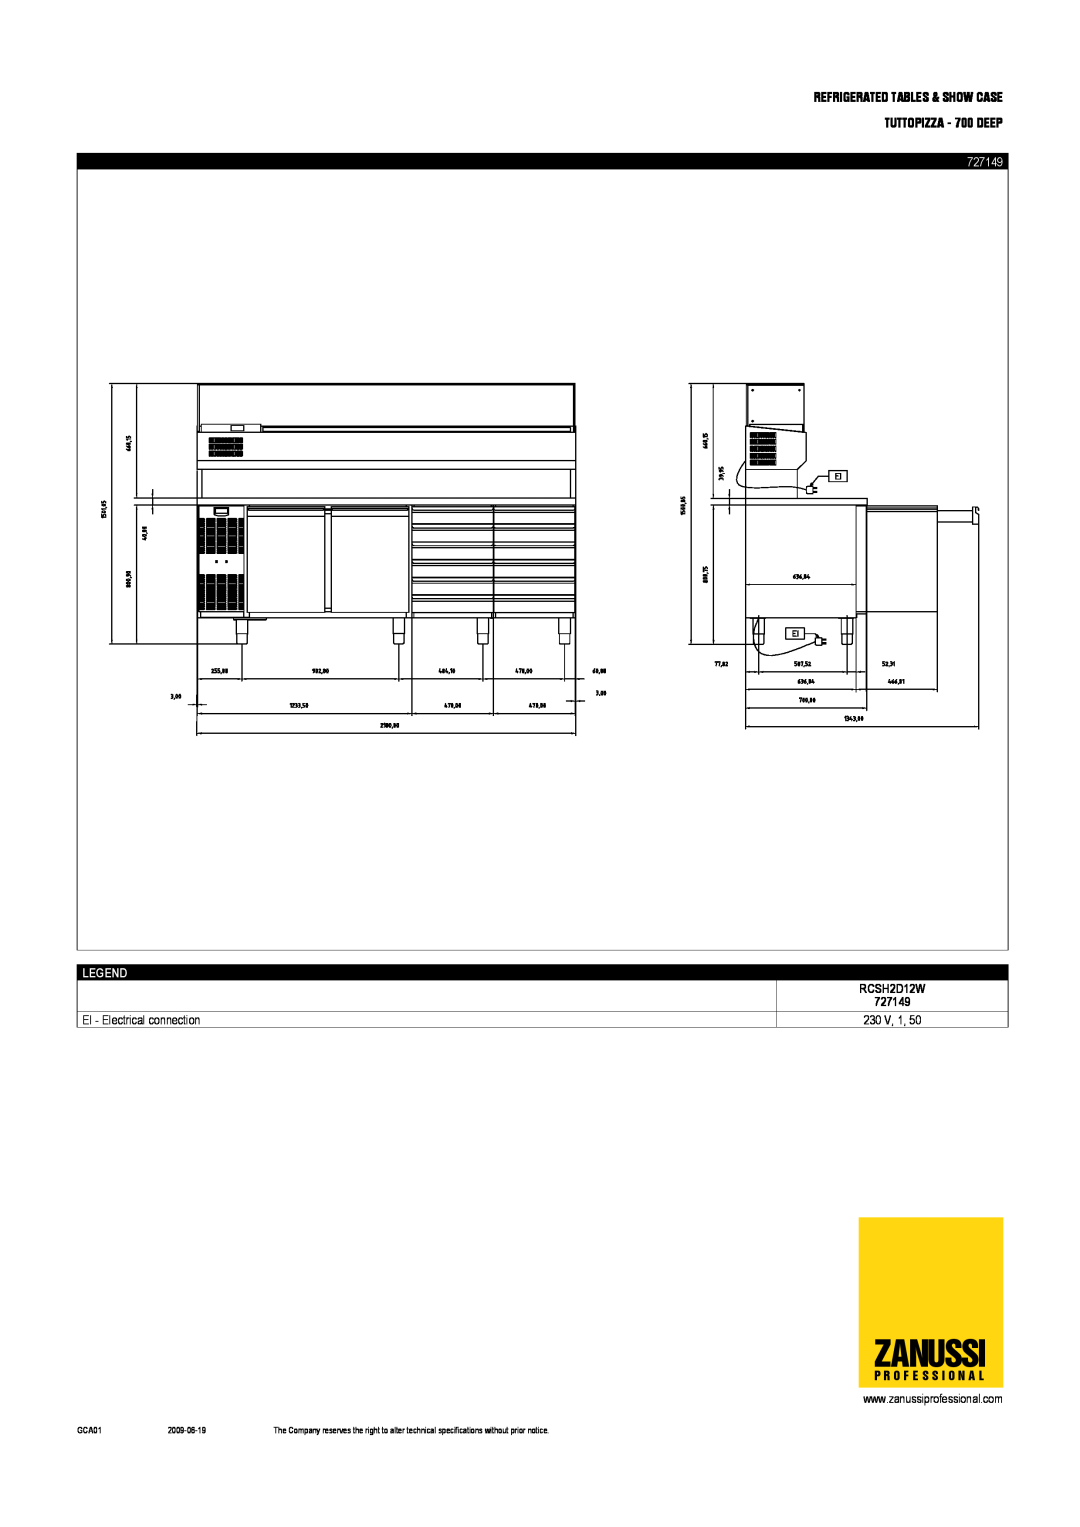 Zanussi RCSH2D6W Zanussi, 727149, Refrigerated Tables & Show Case, TUTTOPIZZA - 700 DEEP, RCSH2D12W, GCA01, 2009-06-19 